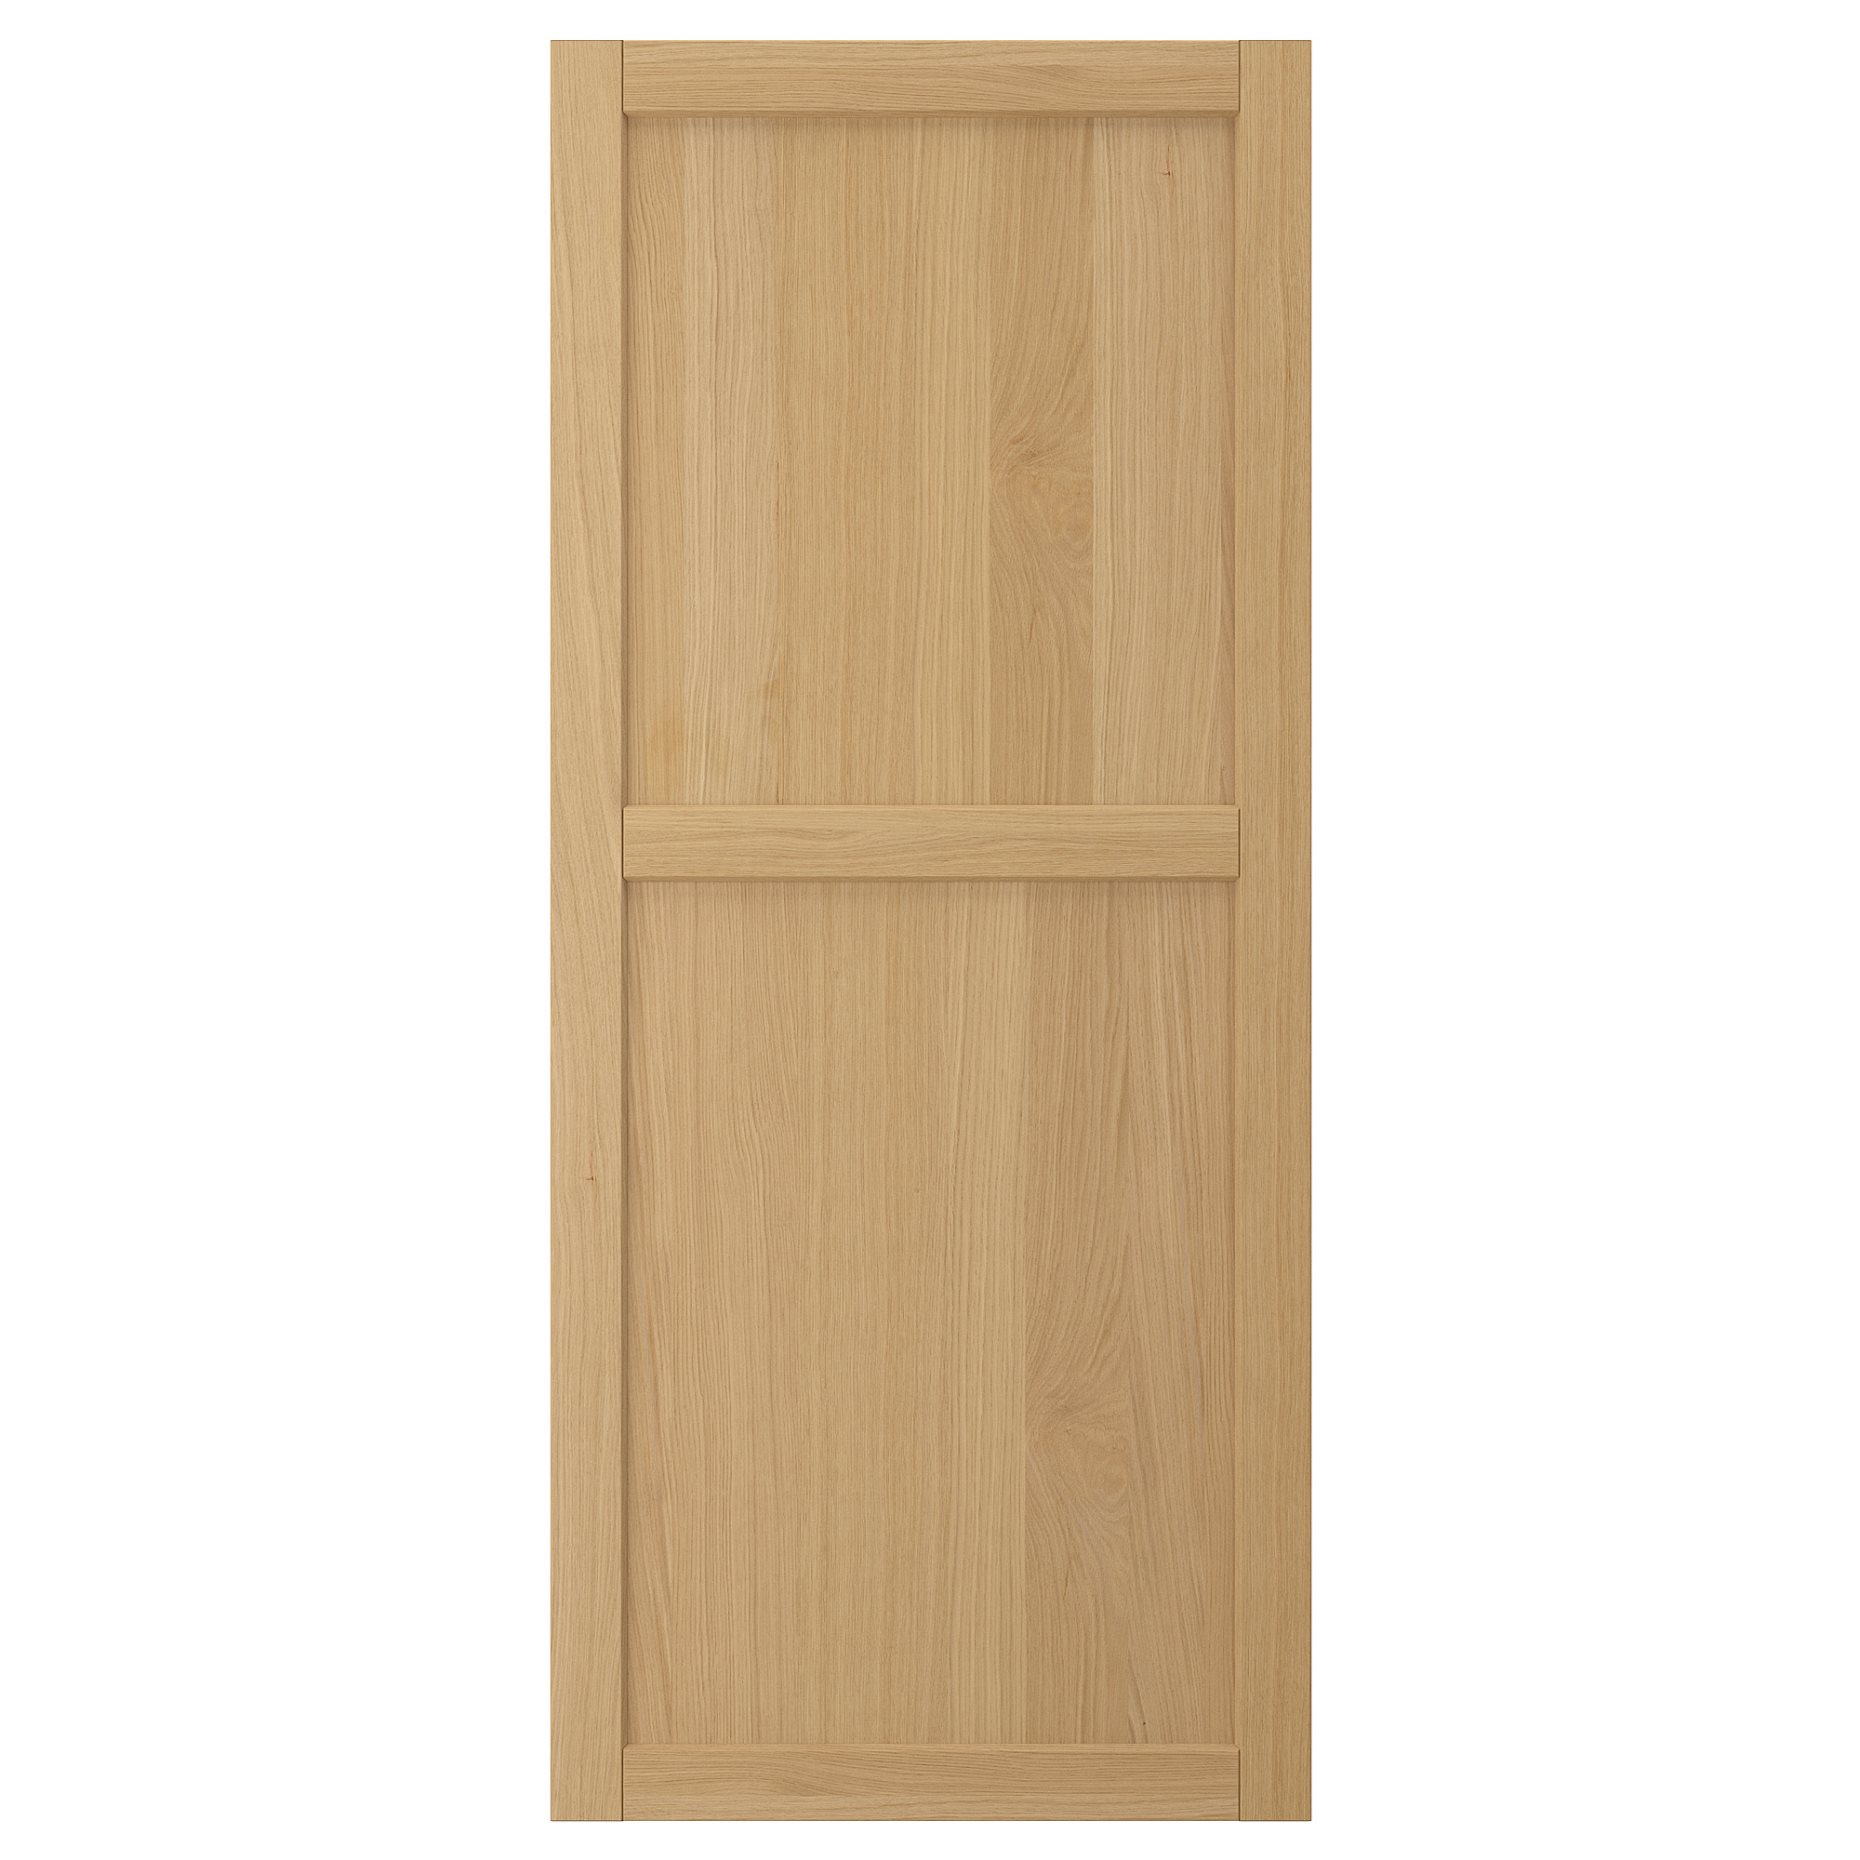 FORSBACKA, πόρτα, 60x140 cm, 505.652.37